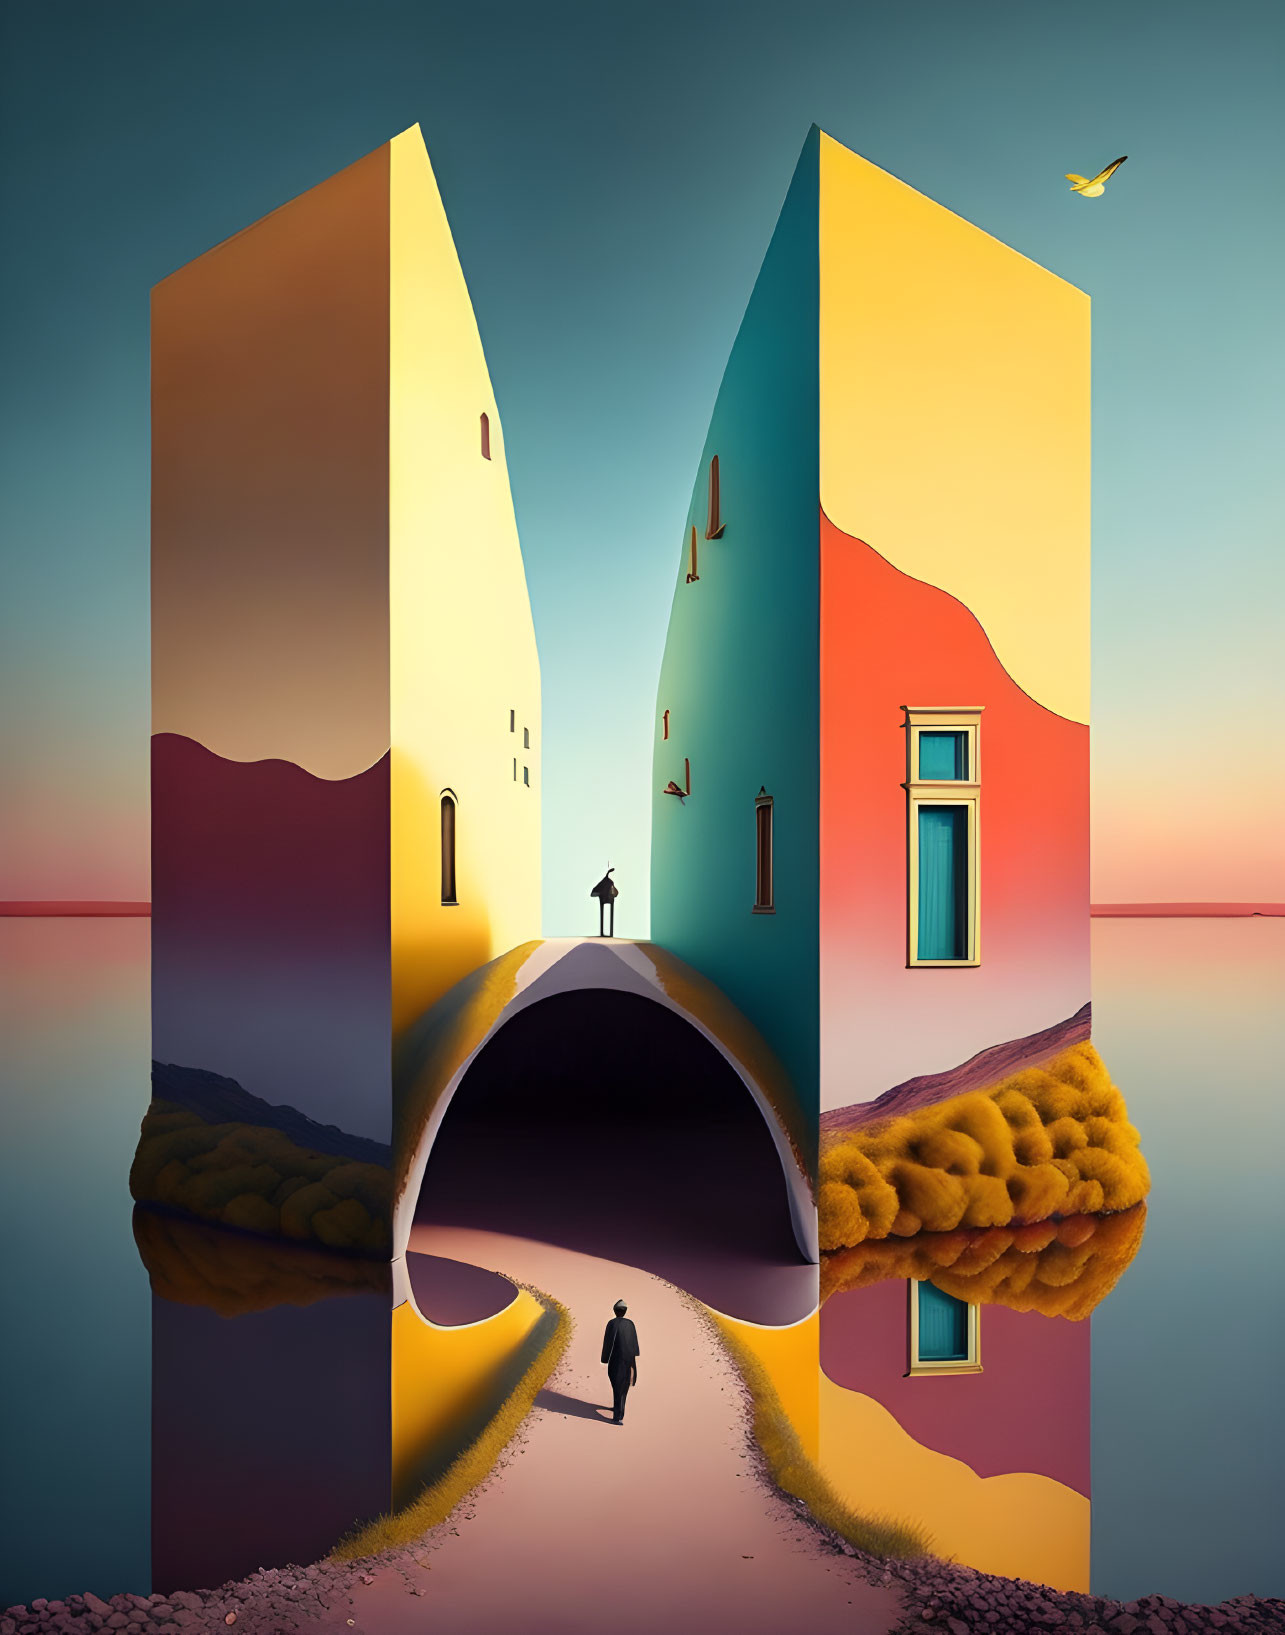 Colorful surreal artwork: buildings, archway, person, bird